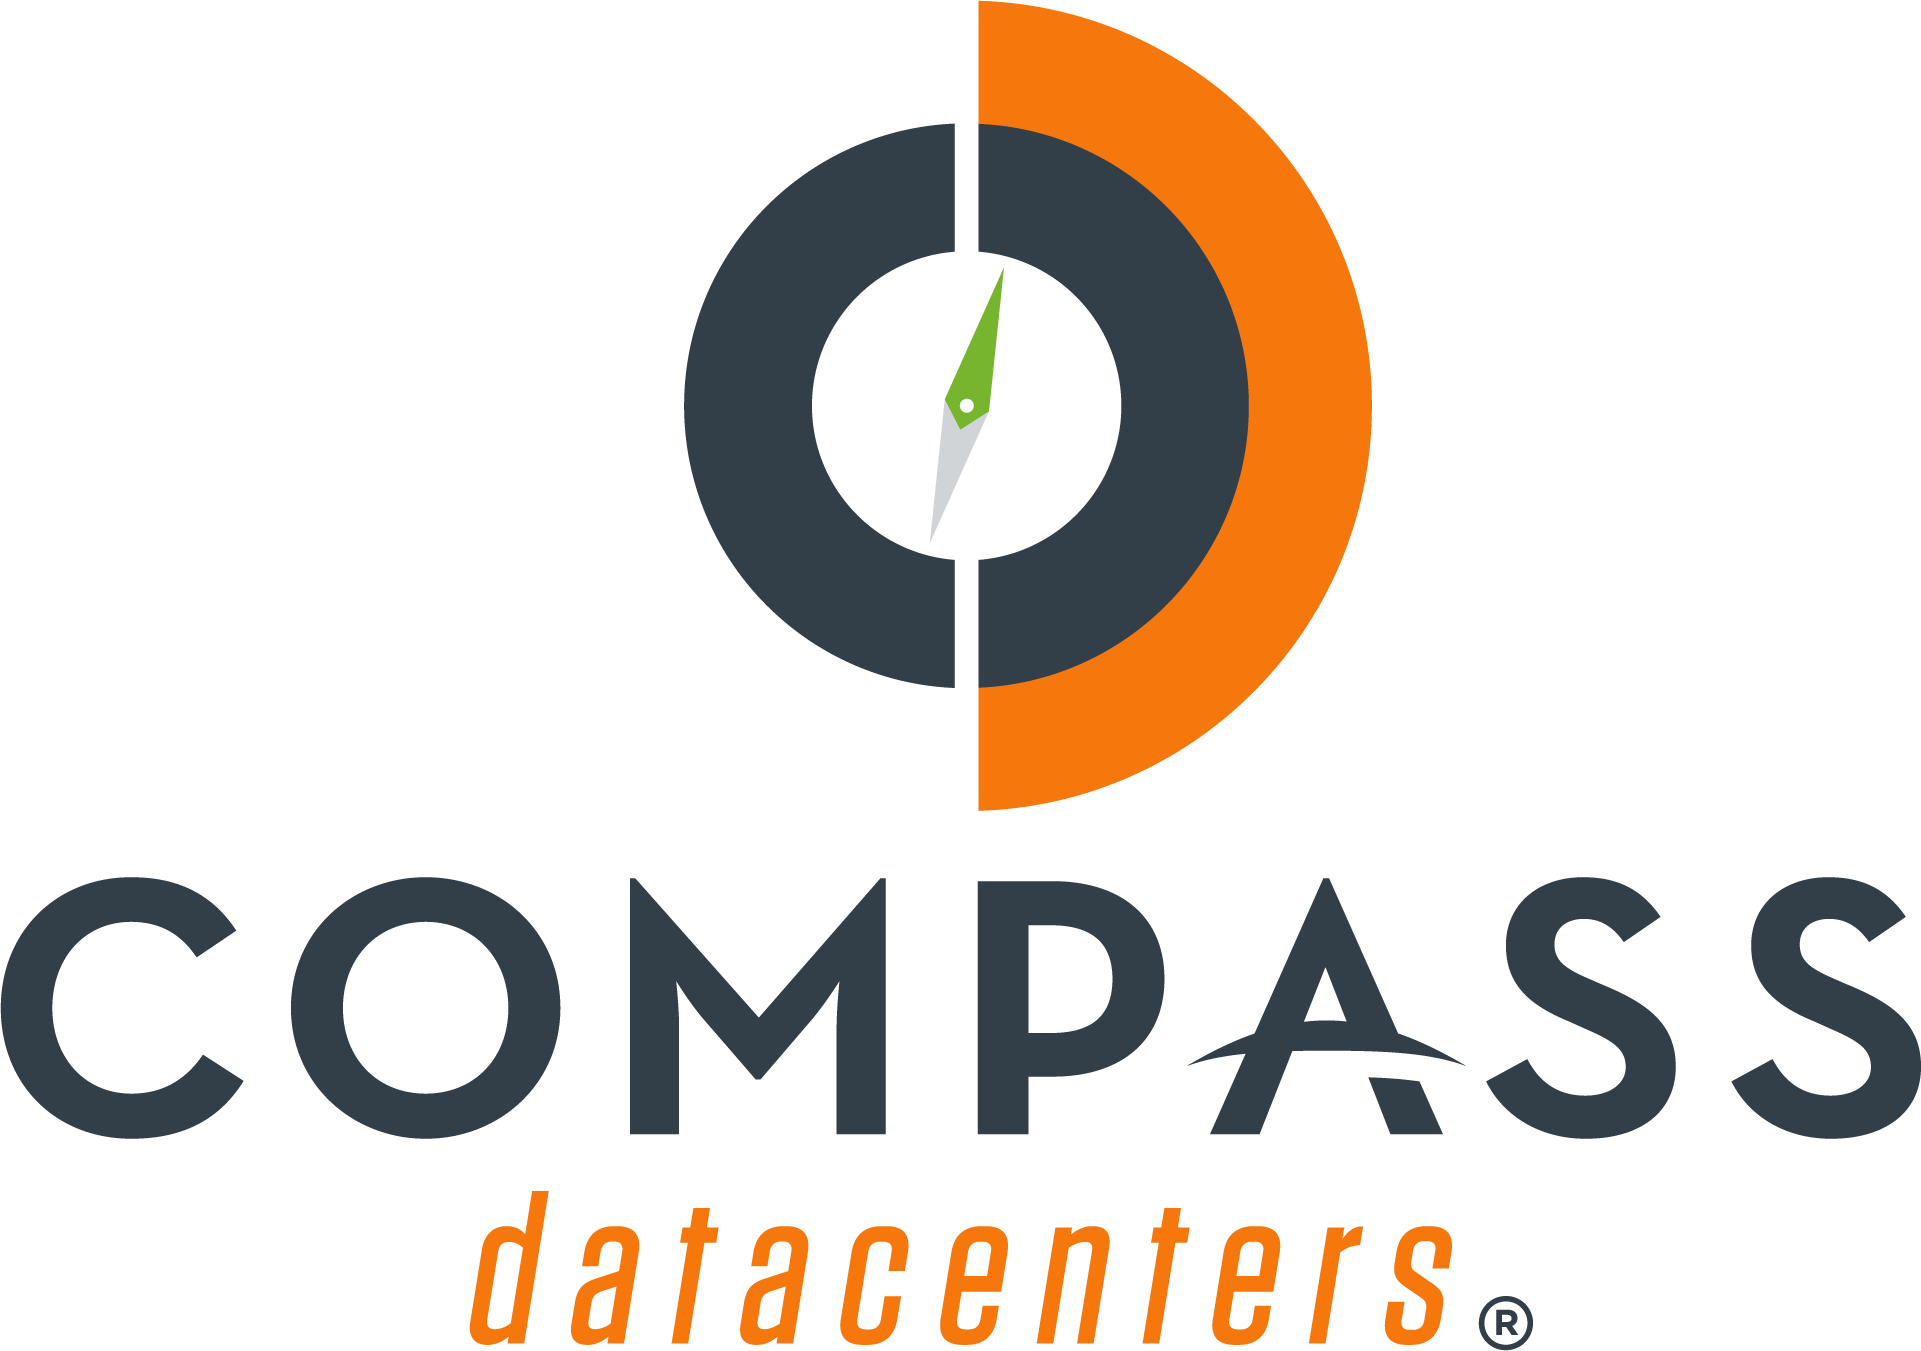 Compass Data Centers